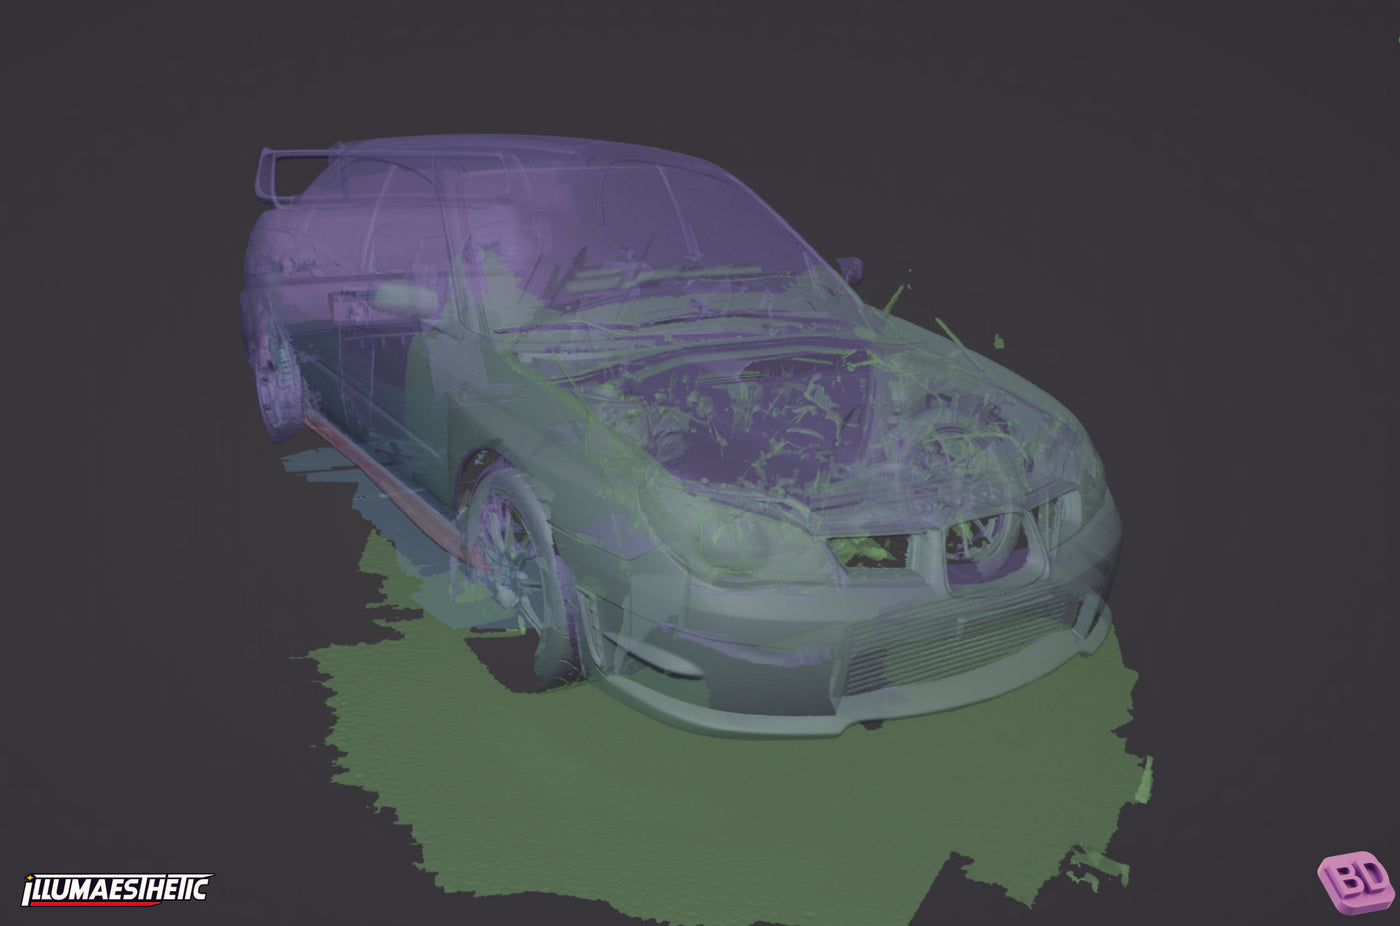 Subaru Impreza Hawkeye (GD) 3D Scan (2006-2007)